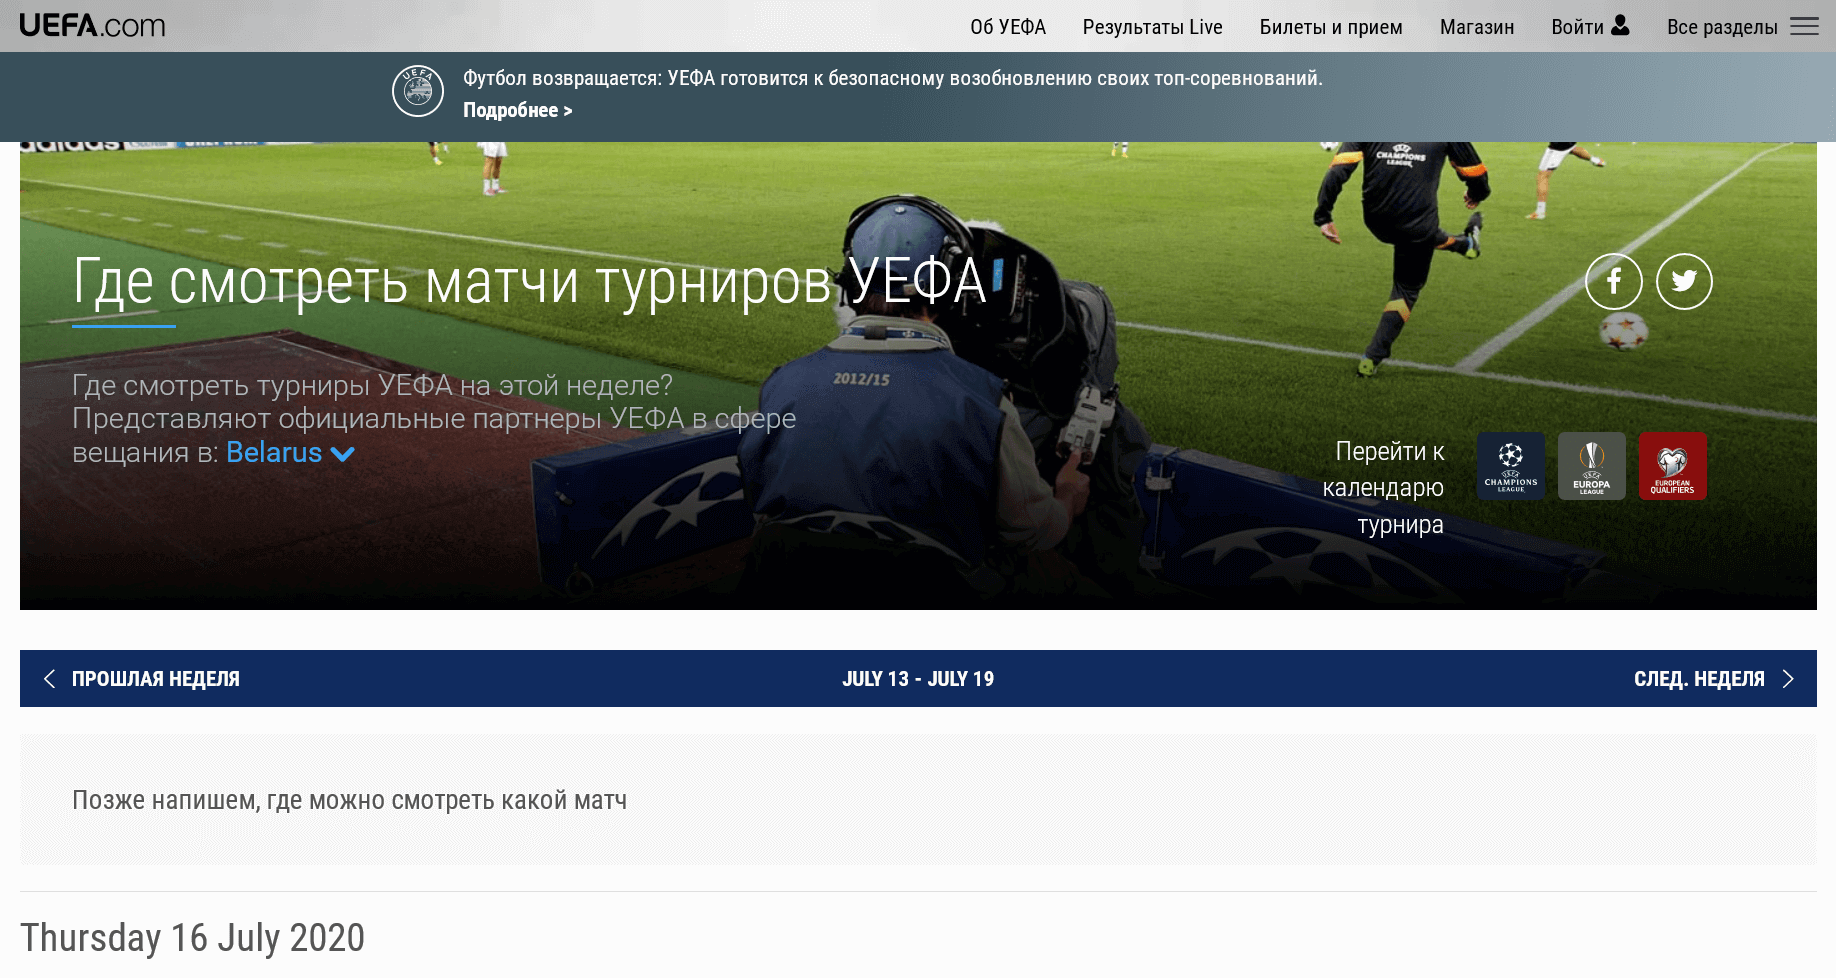 Программа UEFA.com